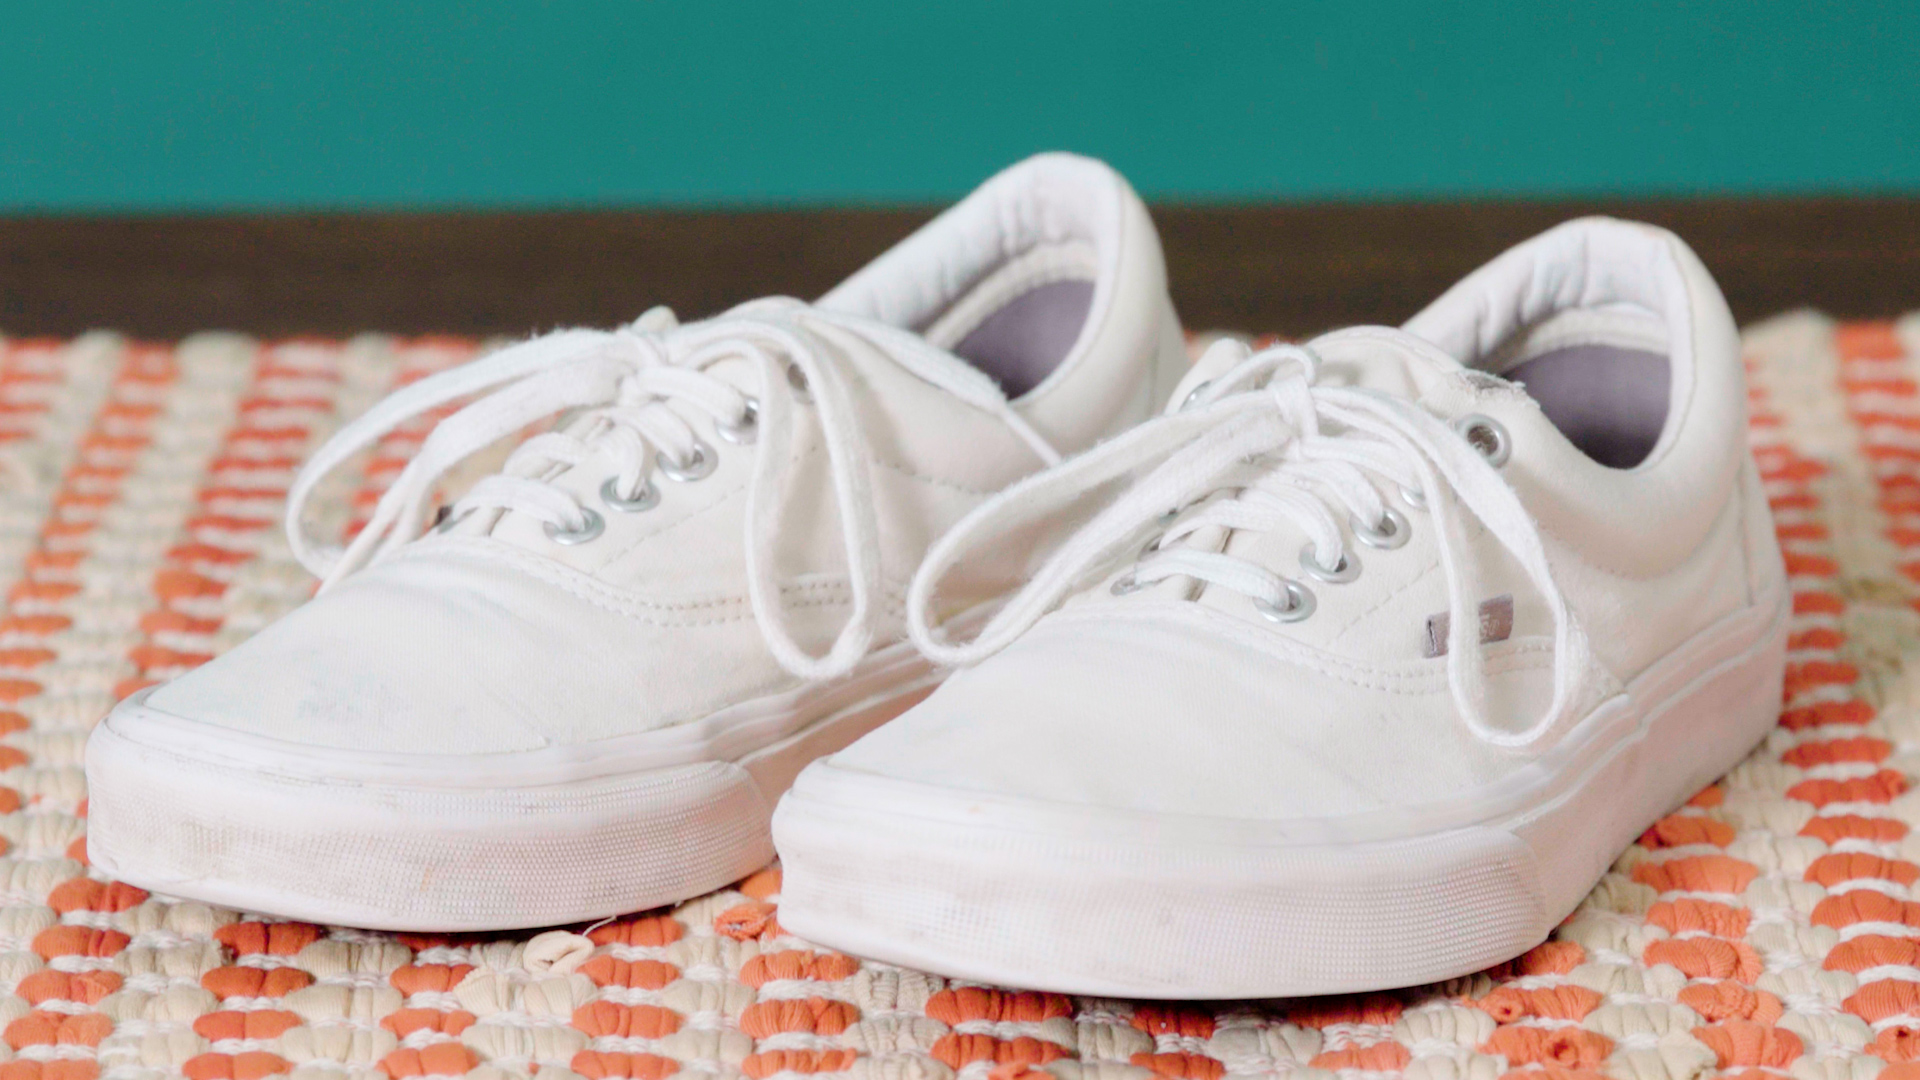 How to Clean White Vans - Easy Ways to Clean White Vans Sneakers